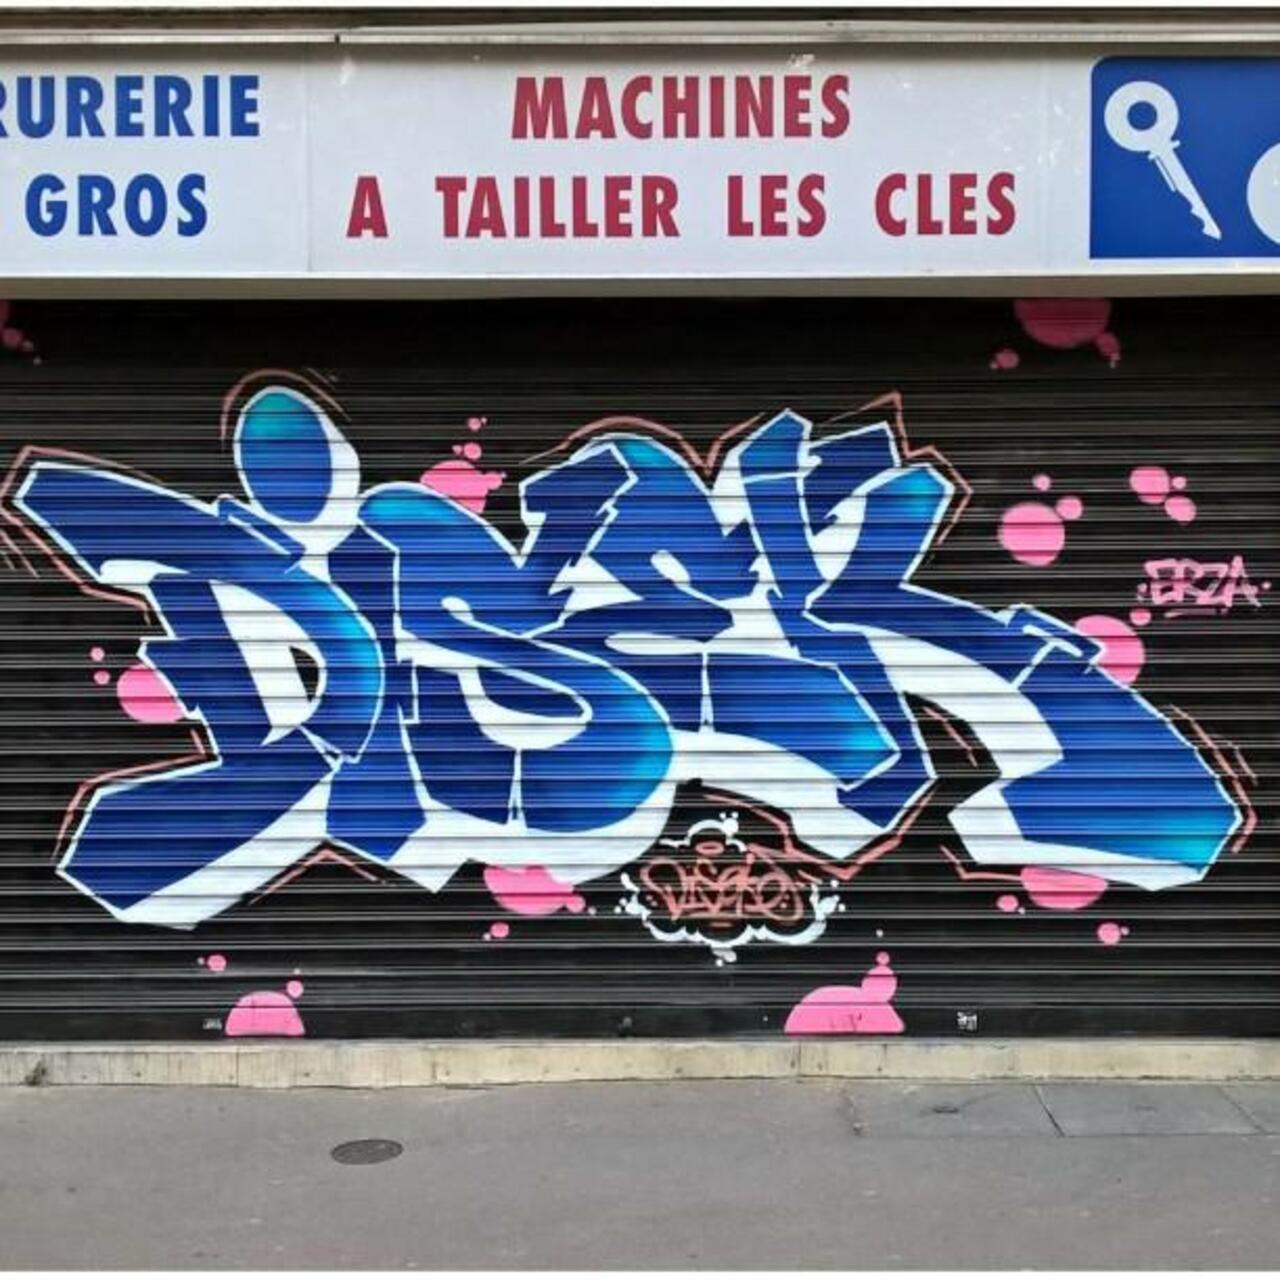 #Paris #graffiti photo by @maxdimontemarciano http://ift.tt/1Pe0T36 #StreetArt http://t.co/9xpMlu91BB